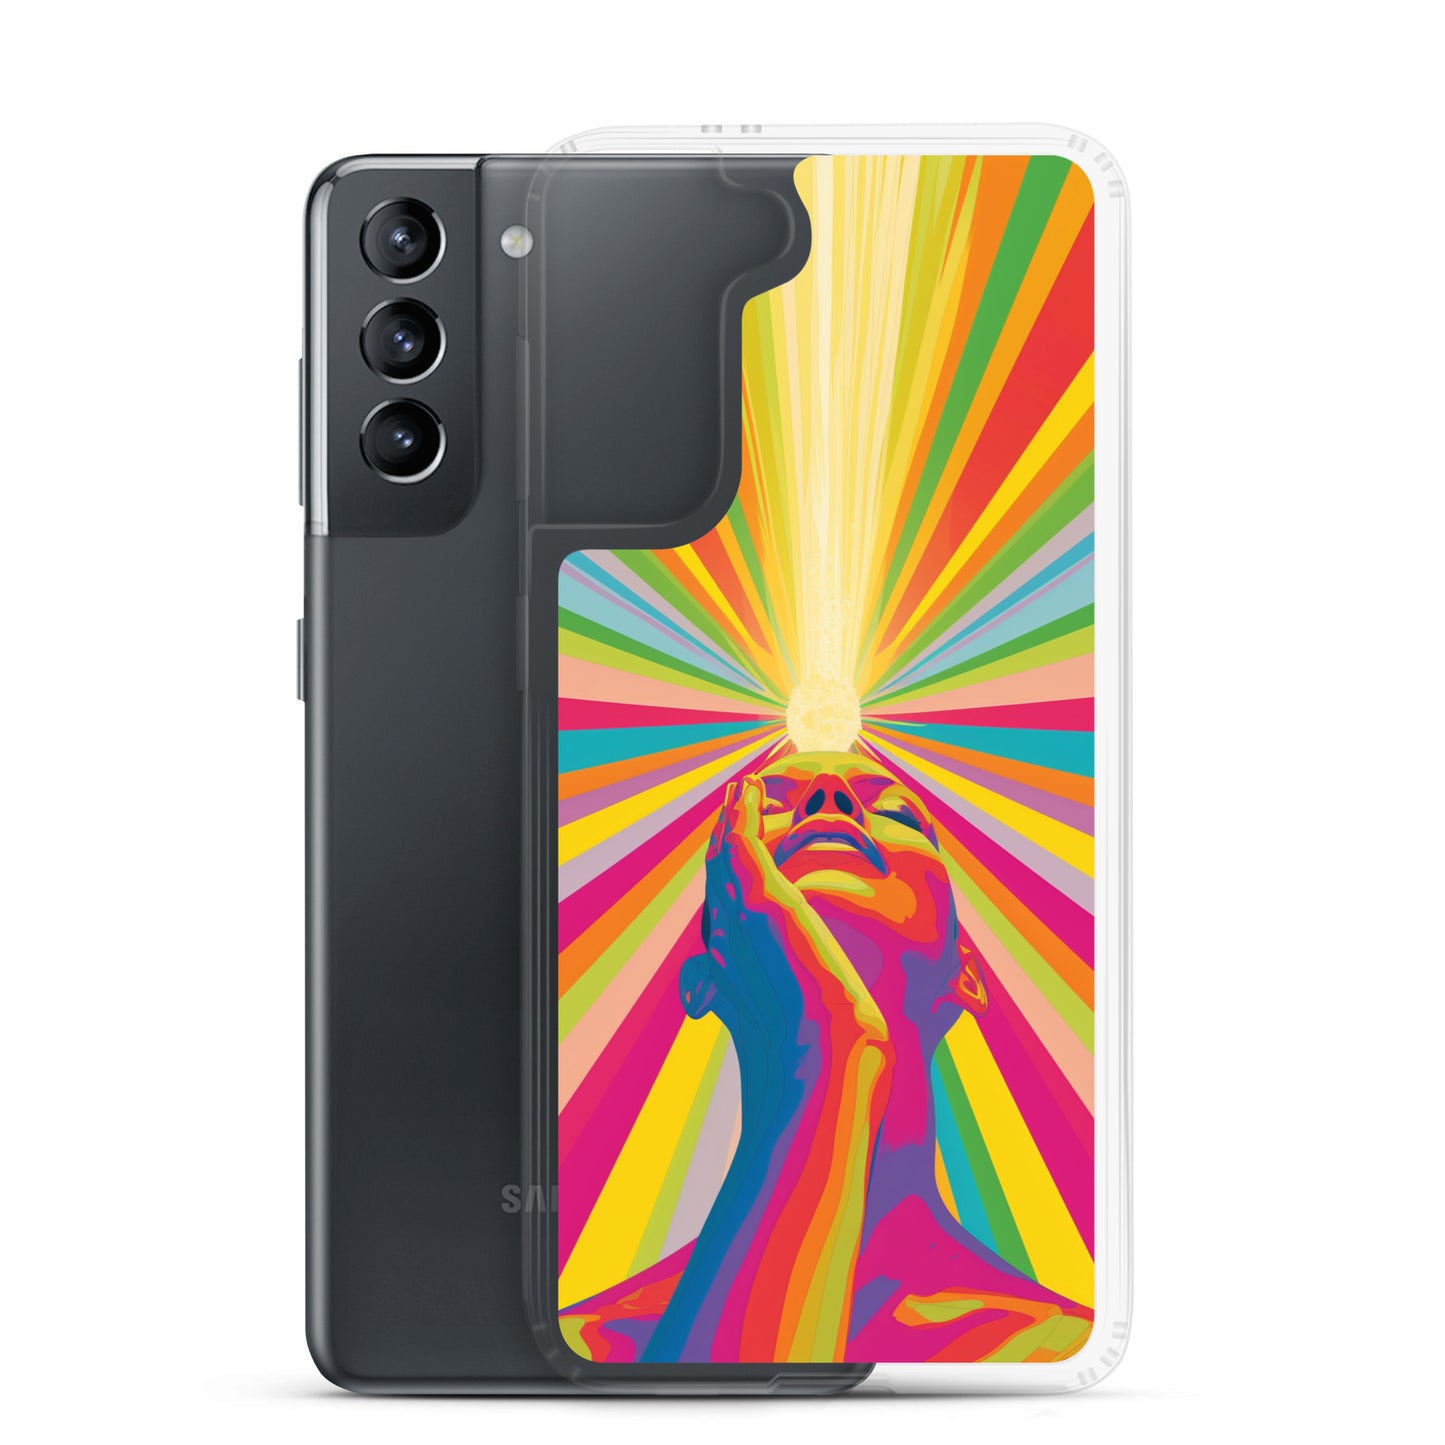 Samsung Case - Spectrum of Awakening